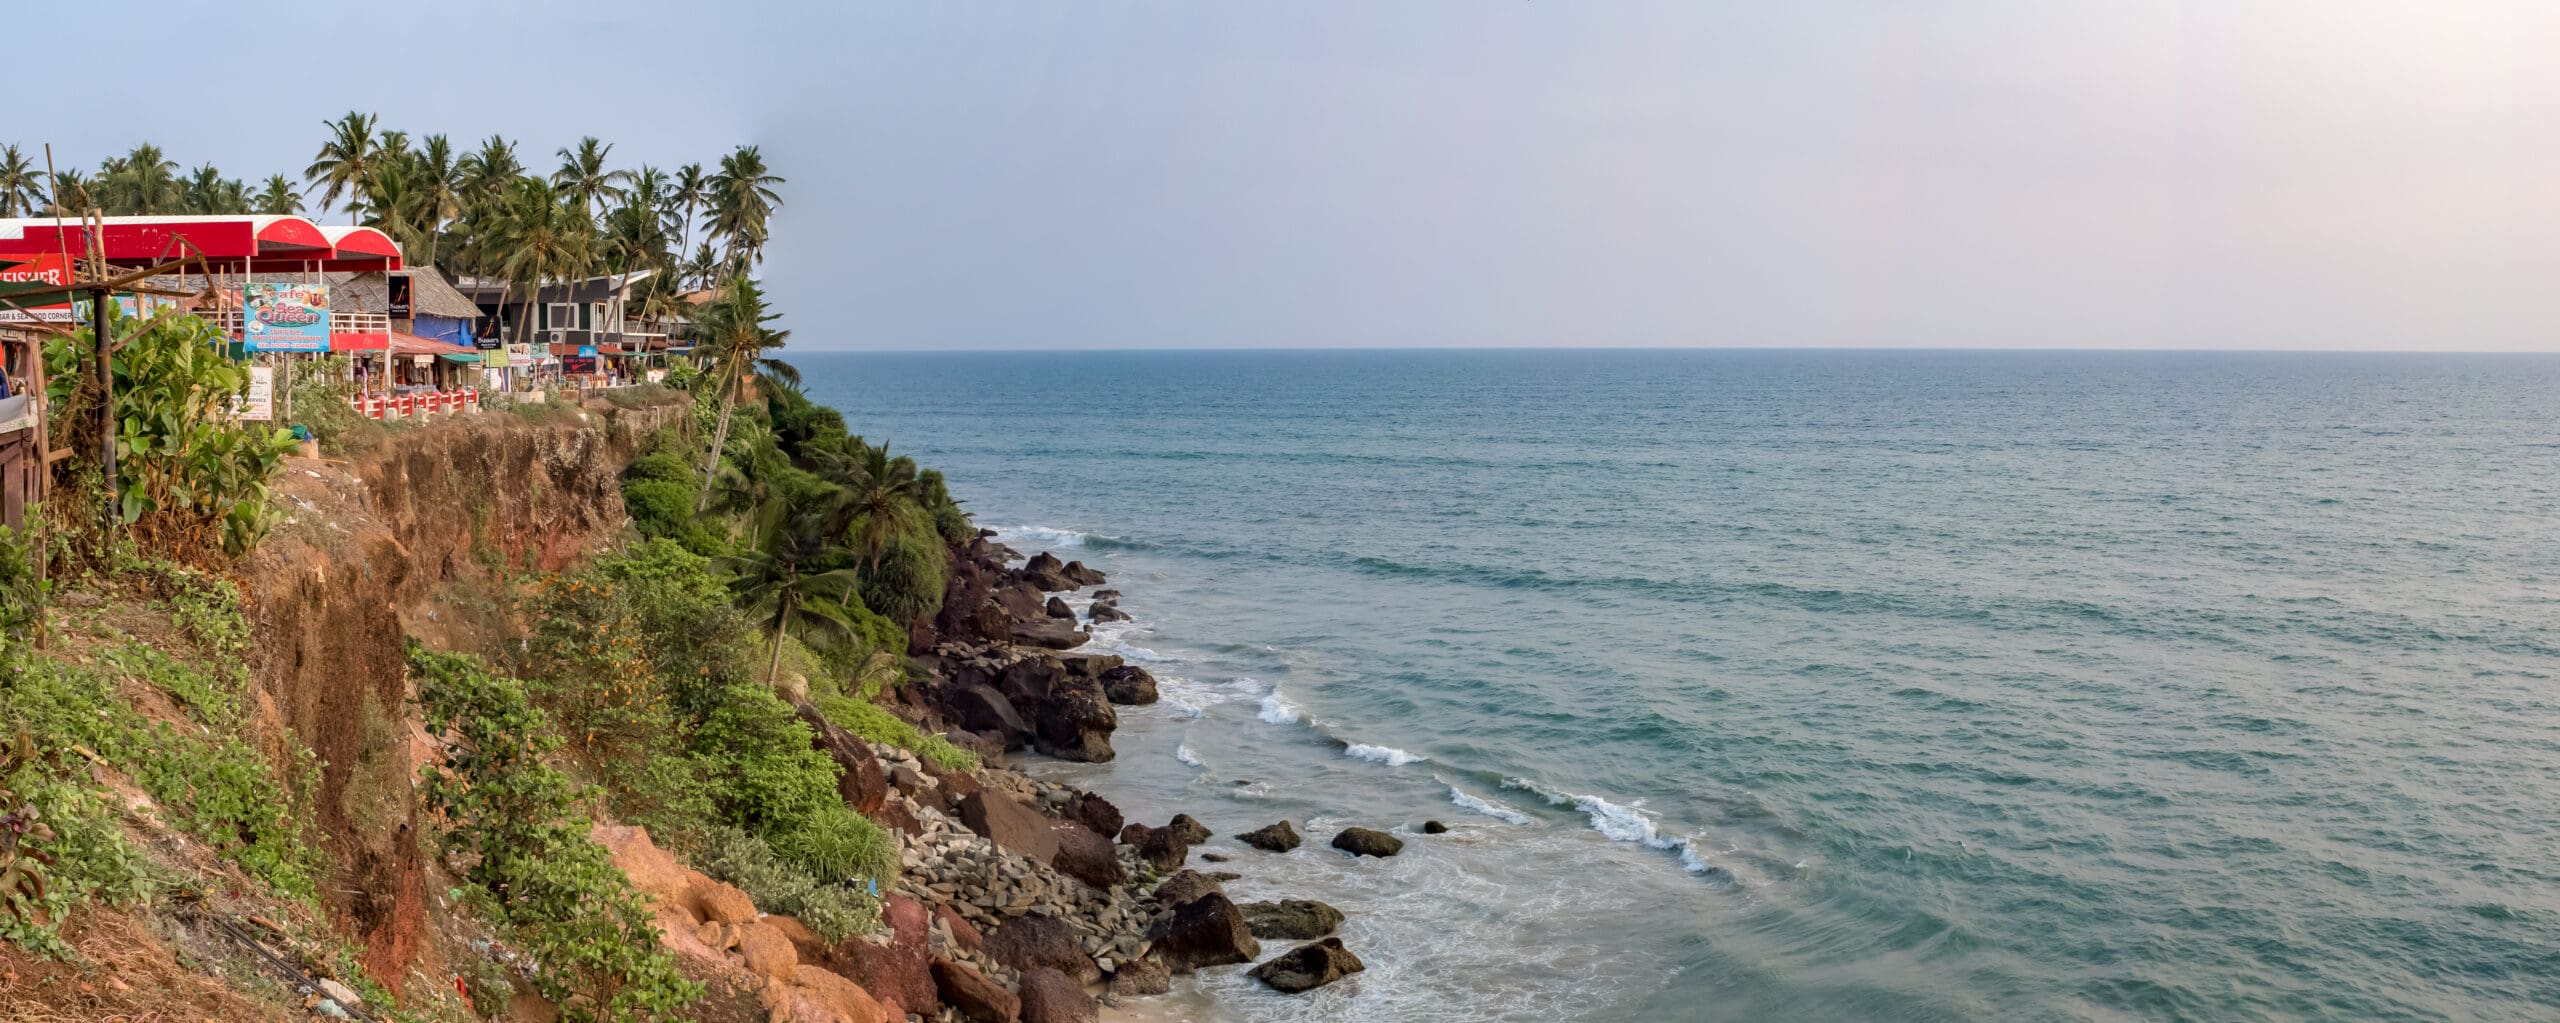 The red cliffs of Varkala beach and the Arabian Sea against the rocks, Varkala, Kerala, India